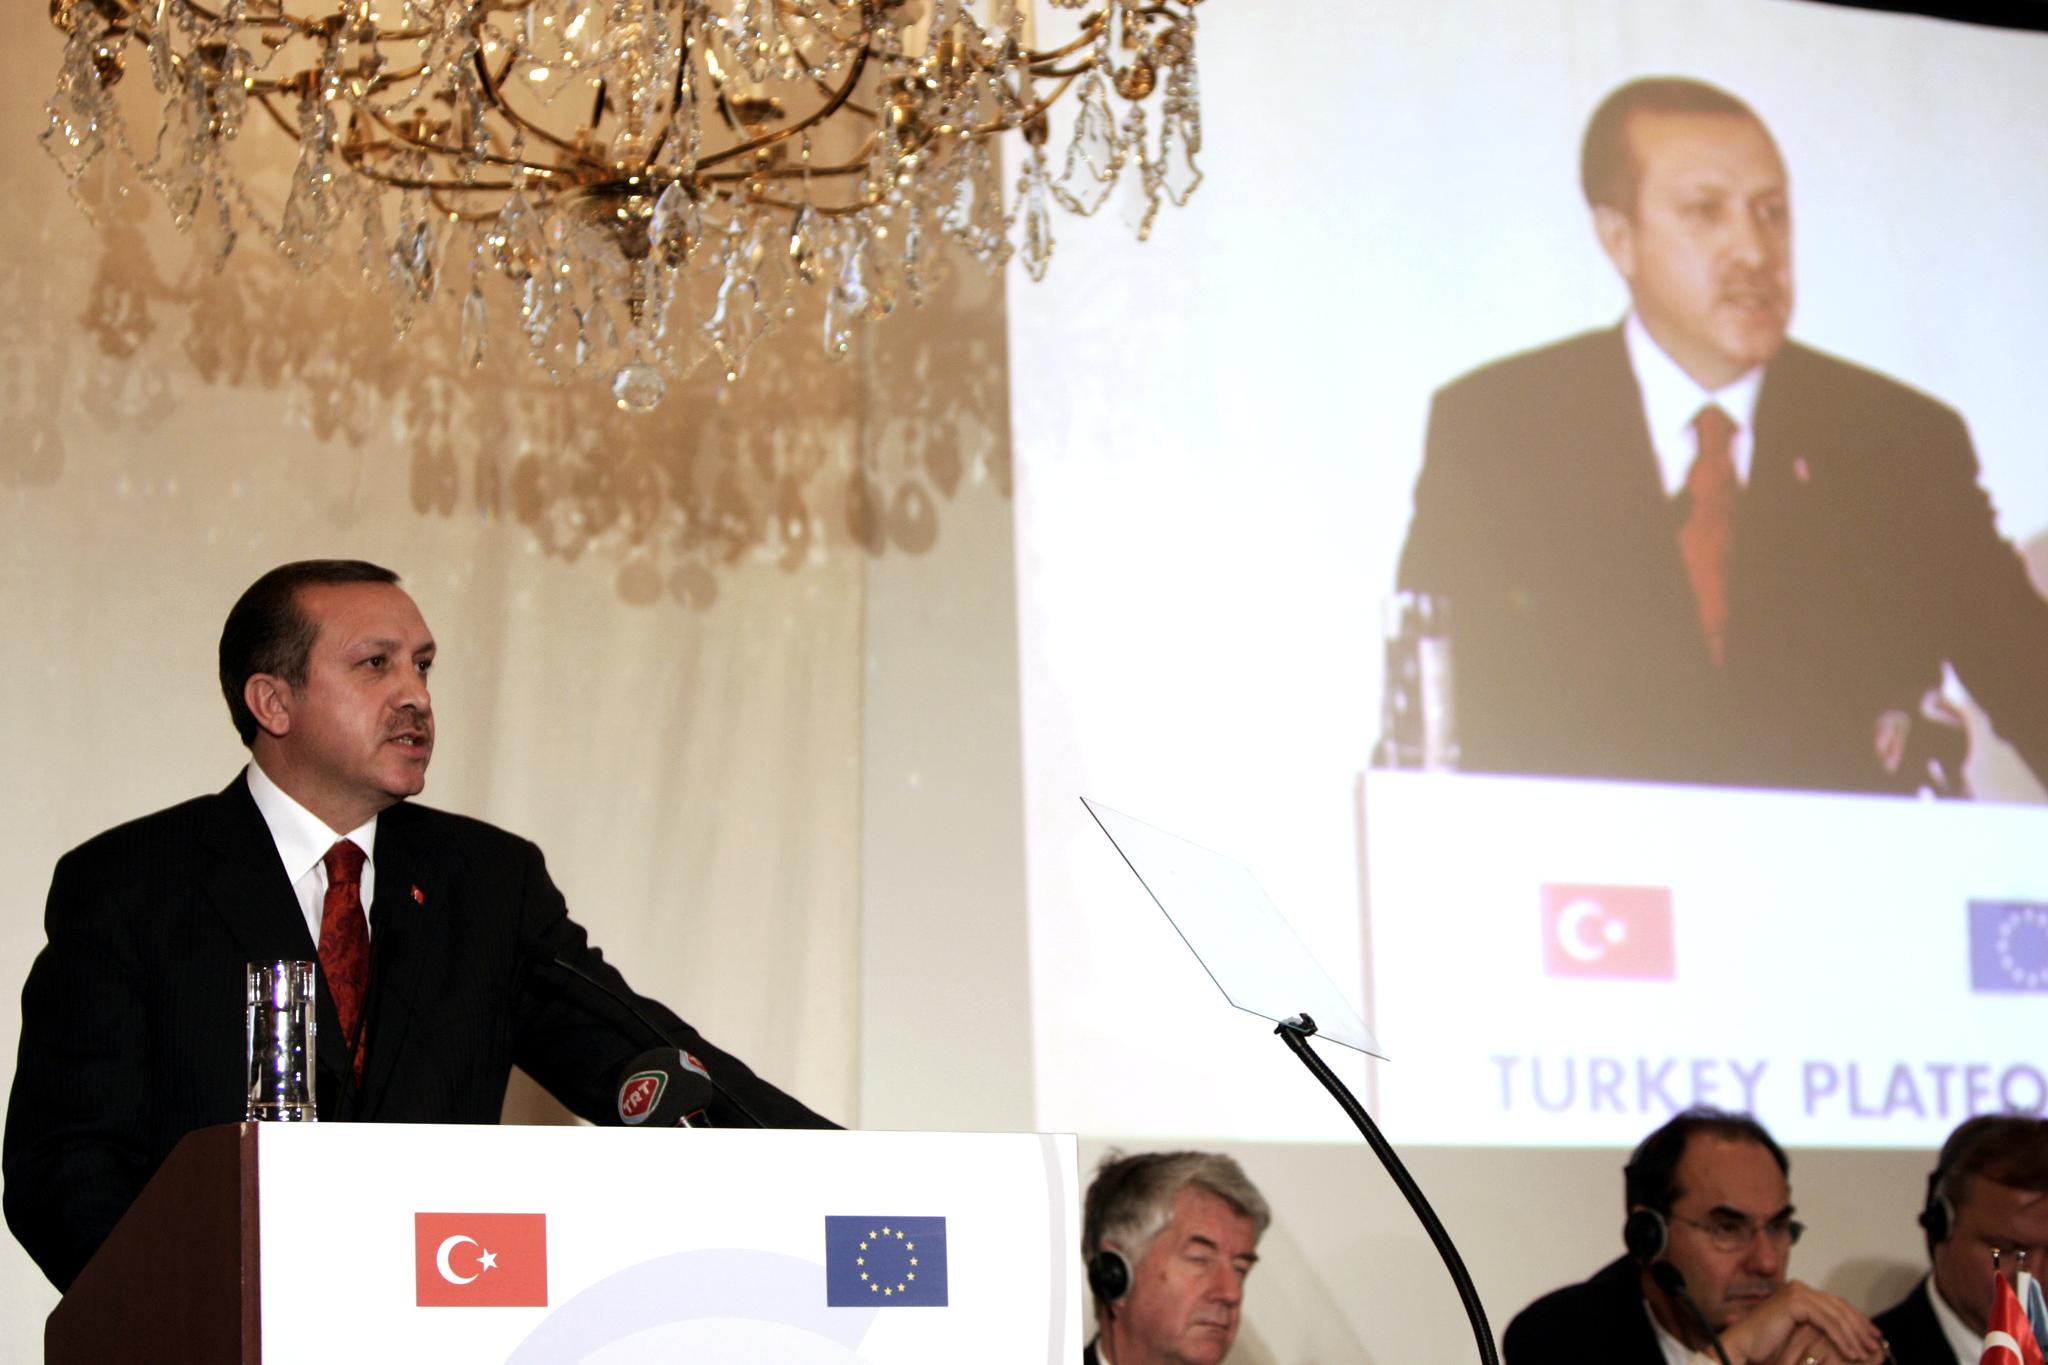 Recep Tayyip Erdogan gives a speech at the Turkish Platform seminar, 10 December 2004, in Brussels (AFP)